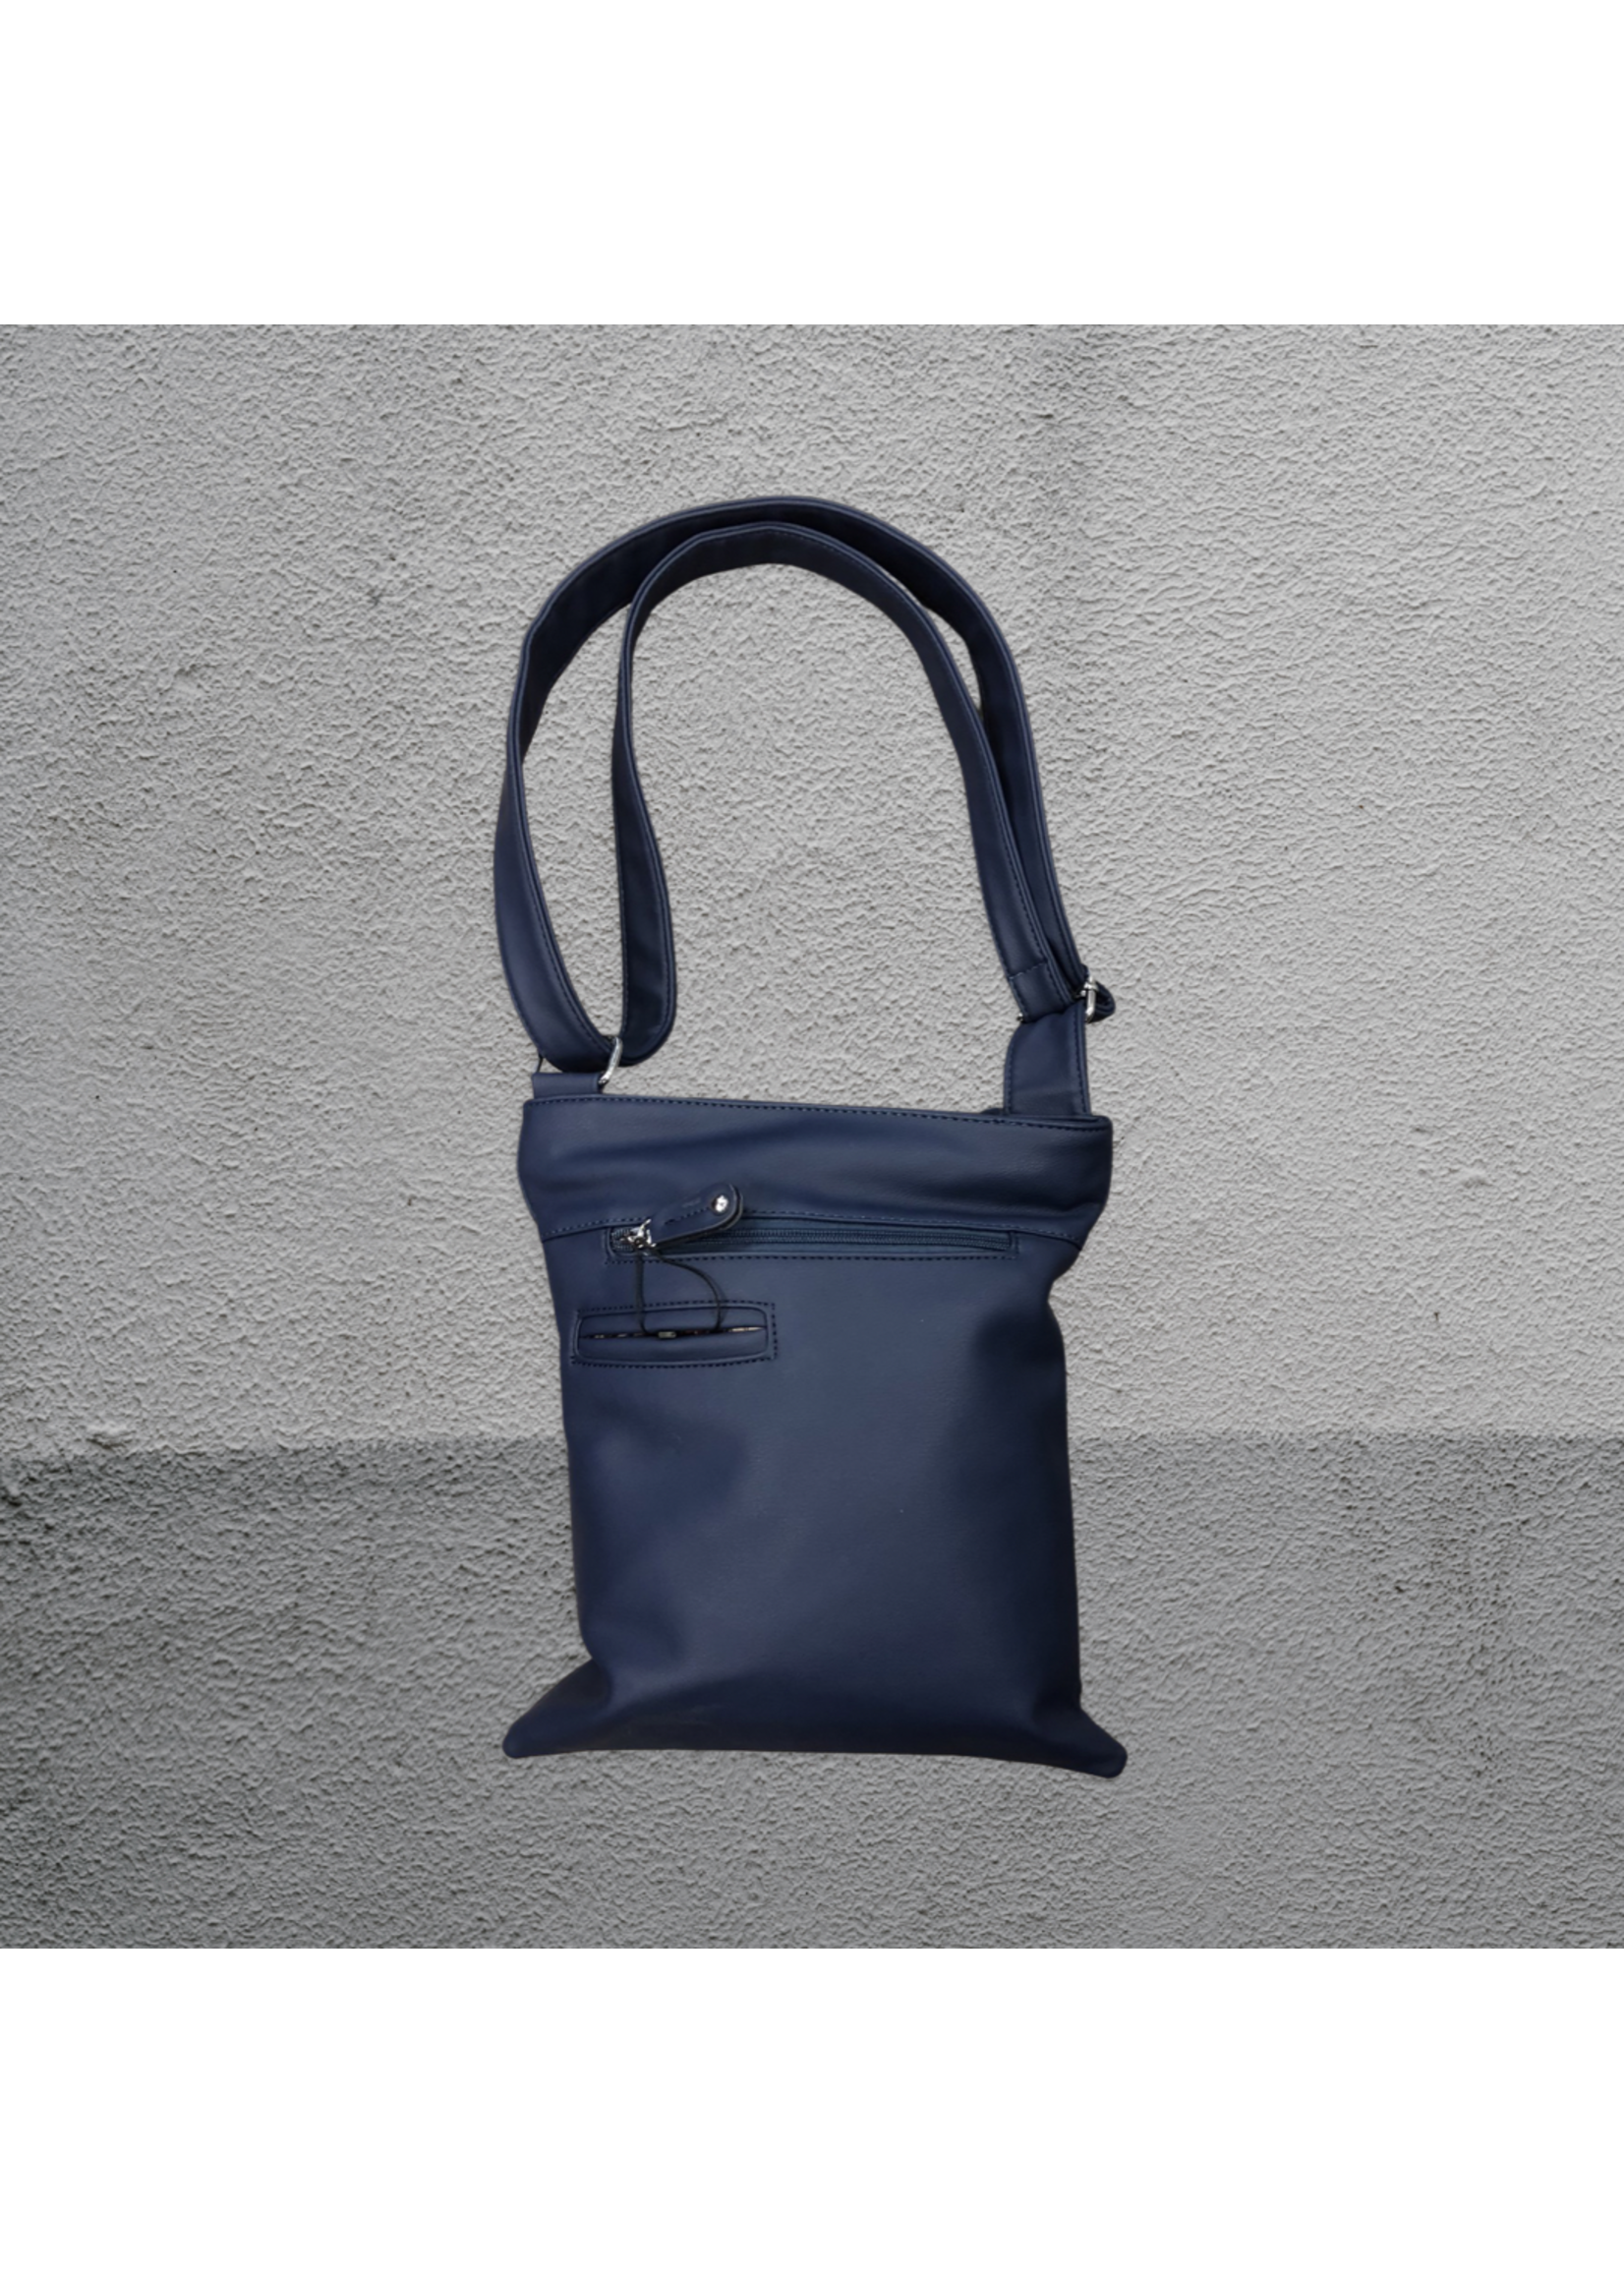 Danche Dark Blue Large Leather Look Crossover Handbag